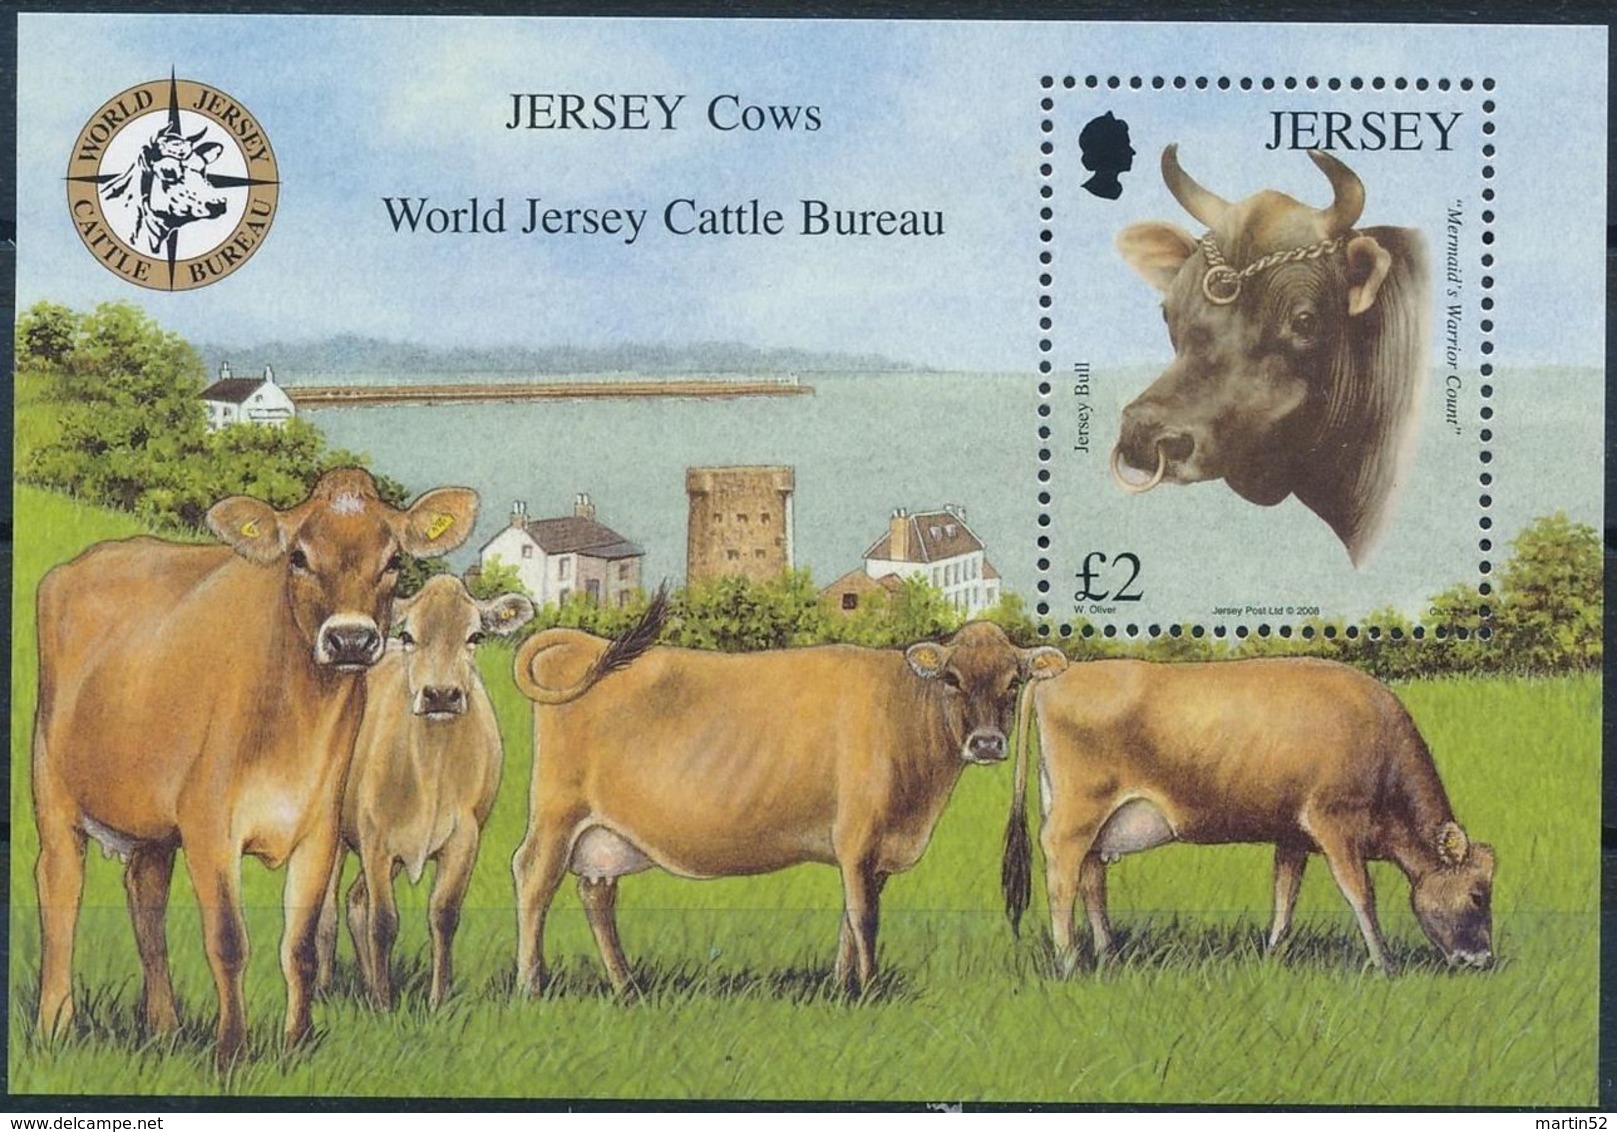 Jersey 2008: "Cows & Bull" Michel-No. 1349 = Block 67 ** MNH - START BELOW POSTAL FACE VALUE (£ 2.00) - Cows